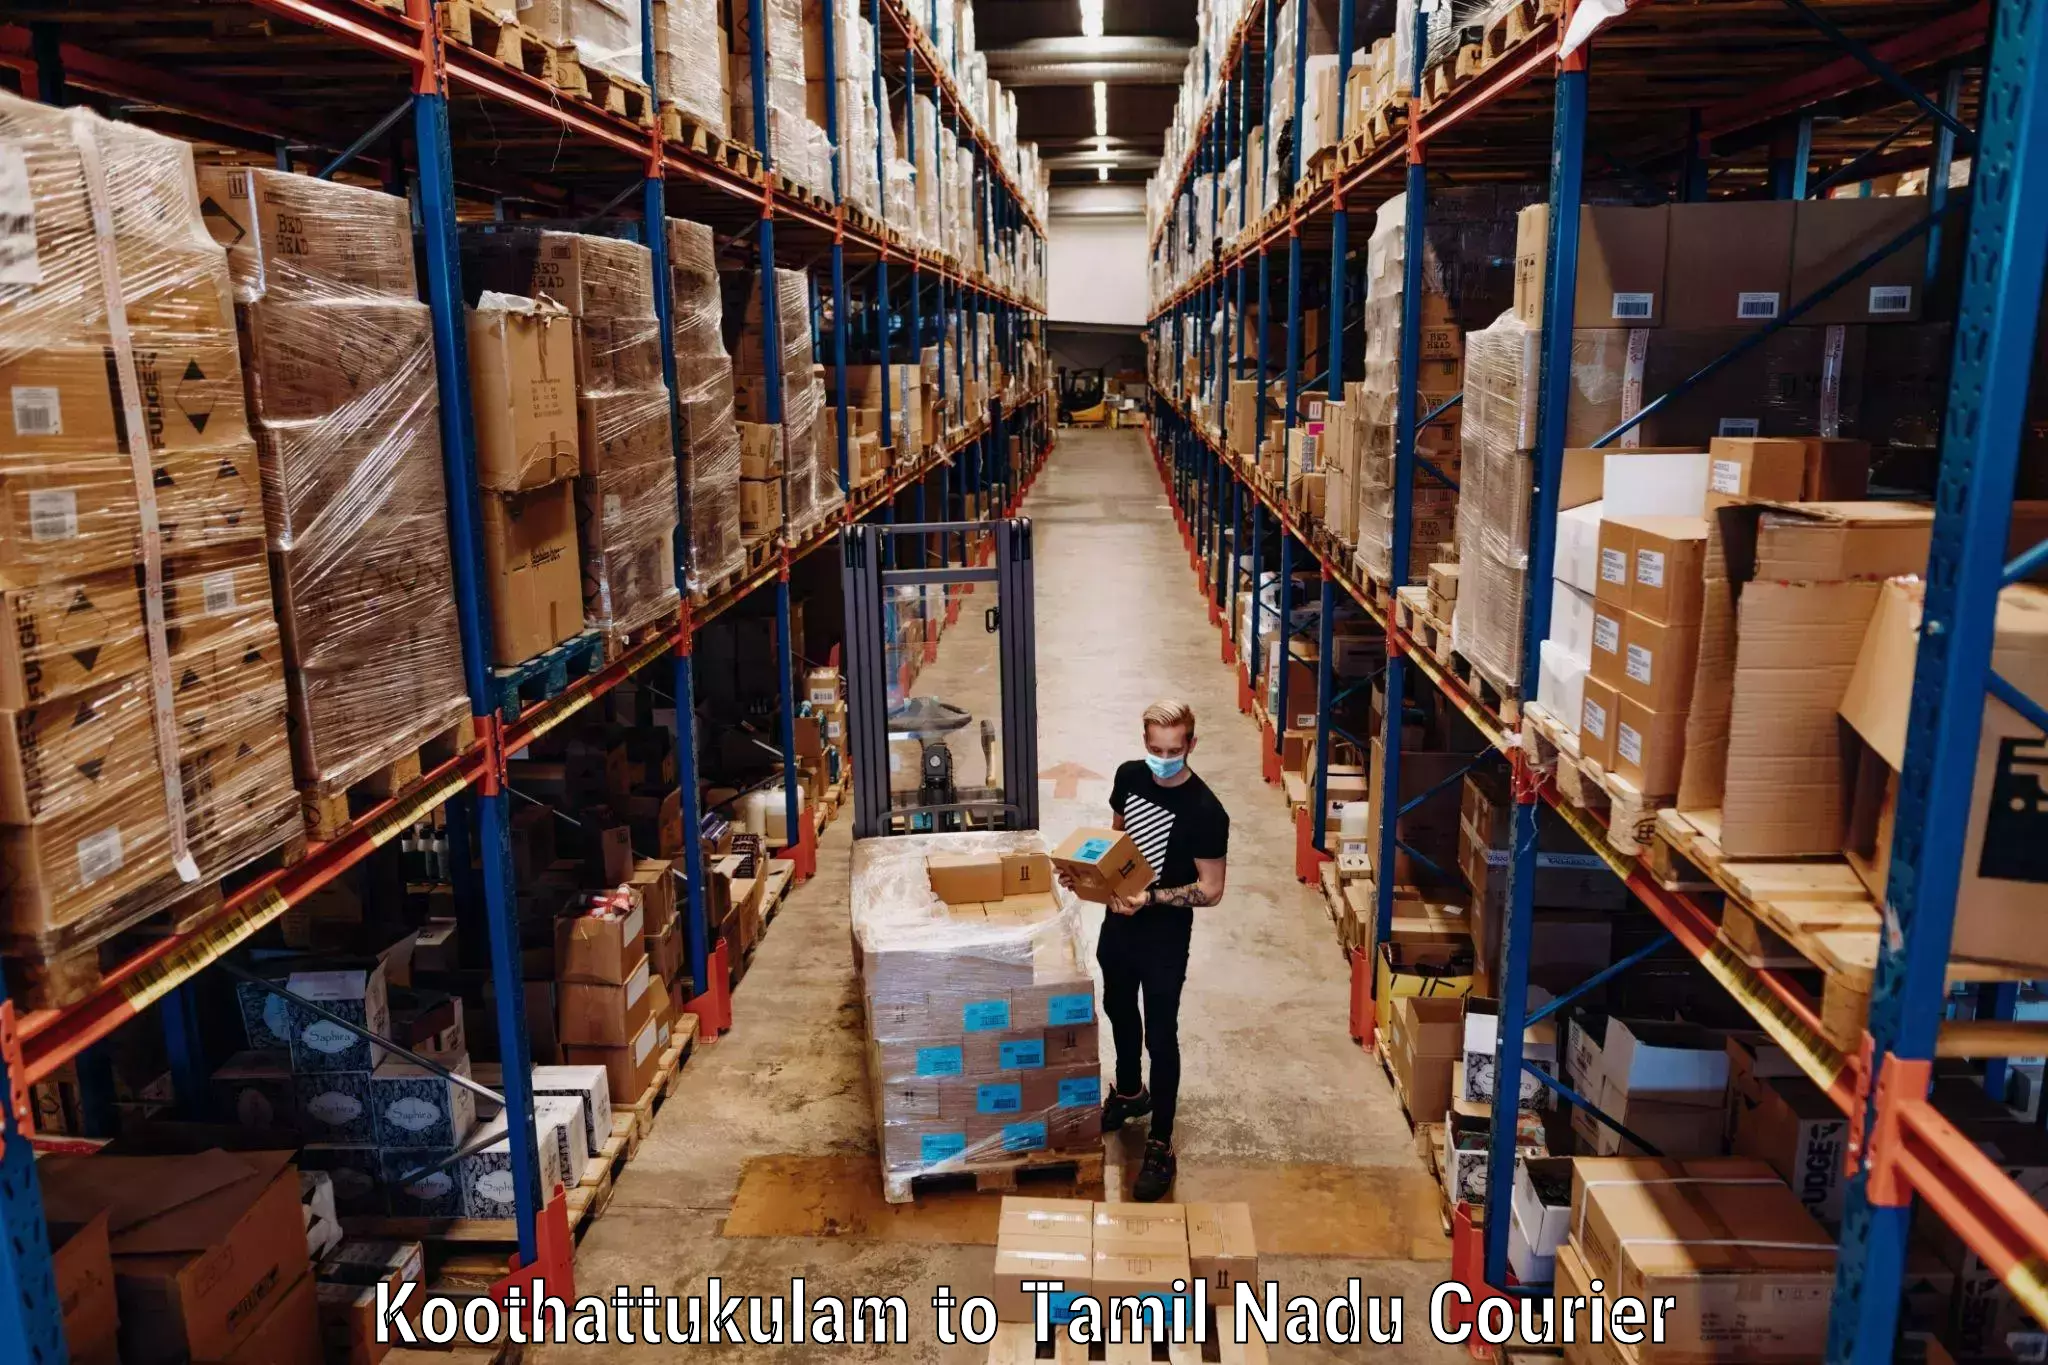 Baggage shipping experts Koothattukulam to Chennai Port